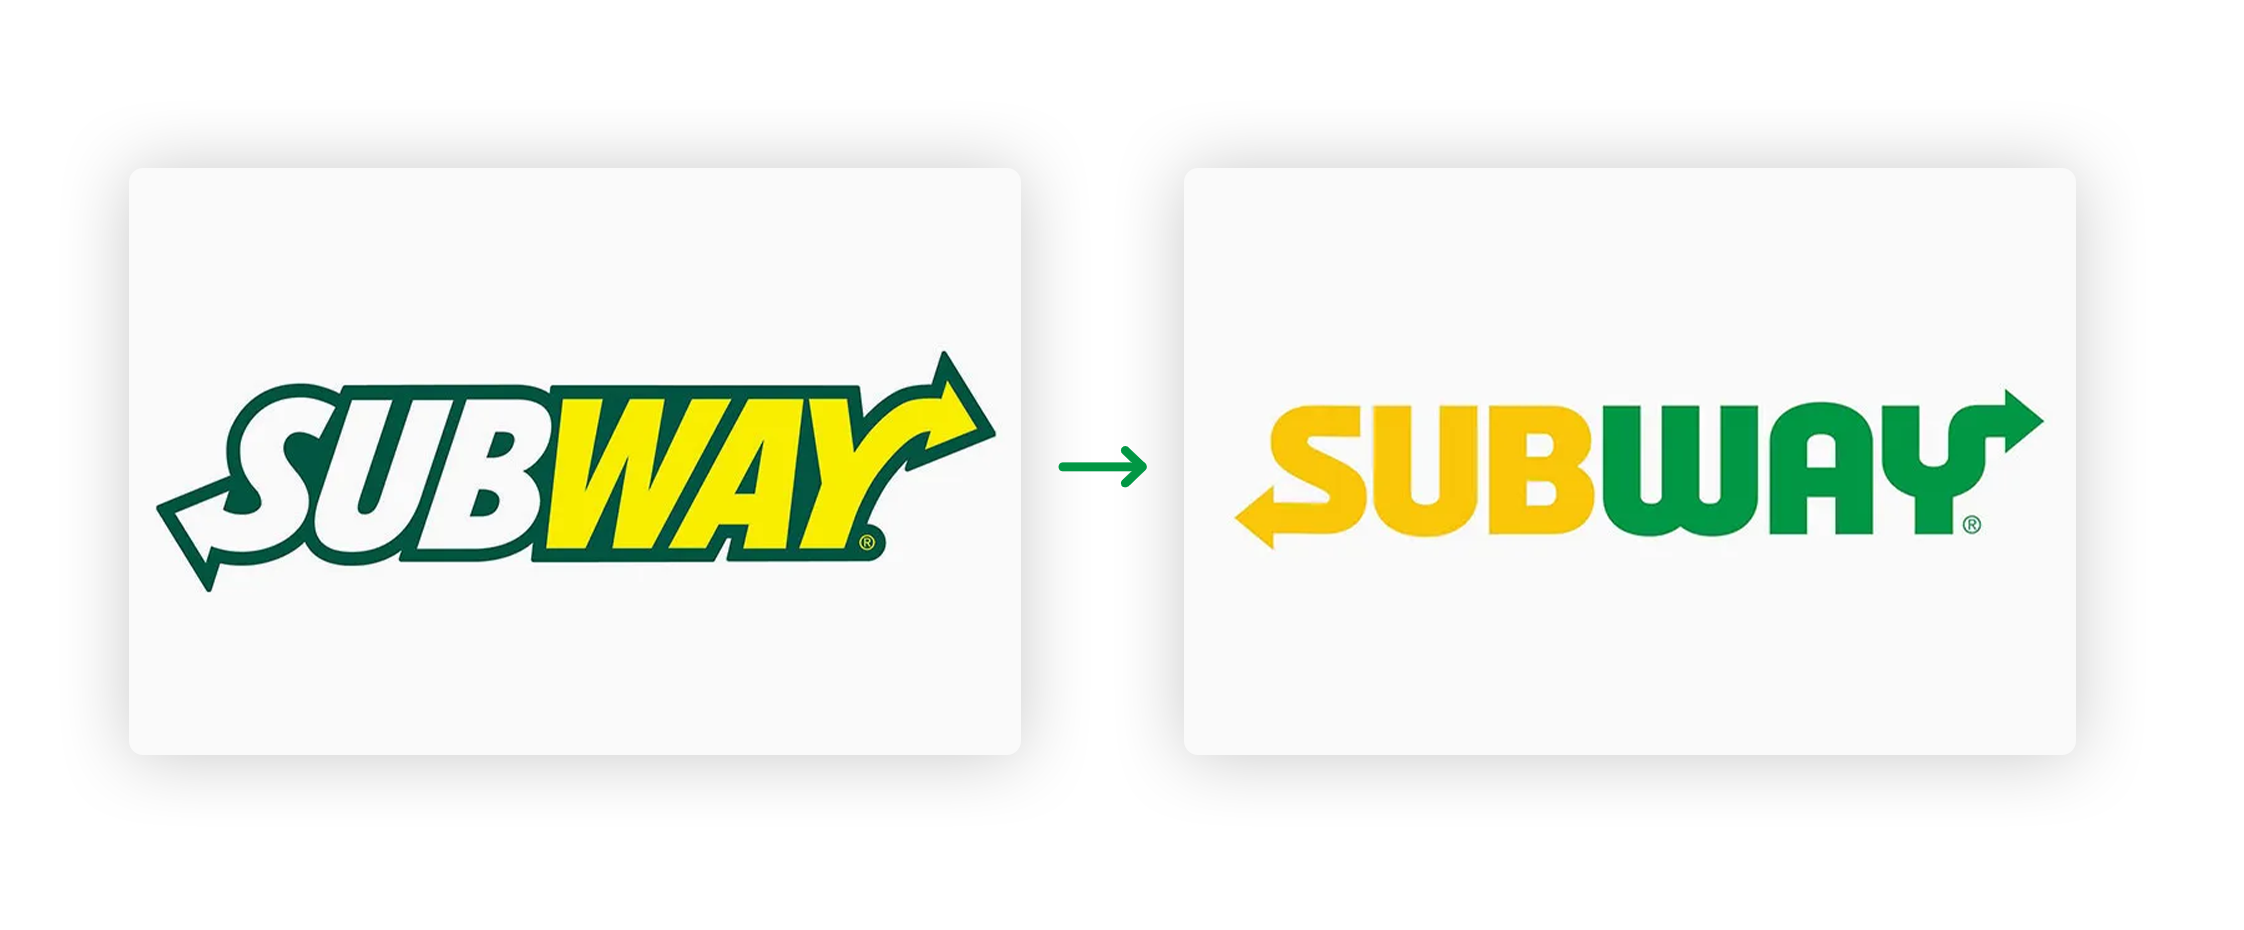 Subway Rebrand